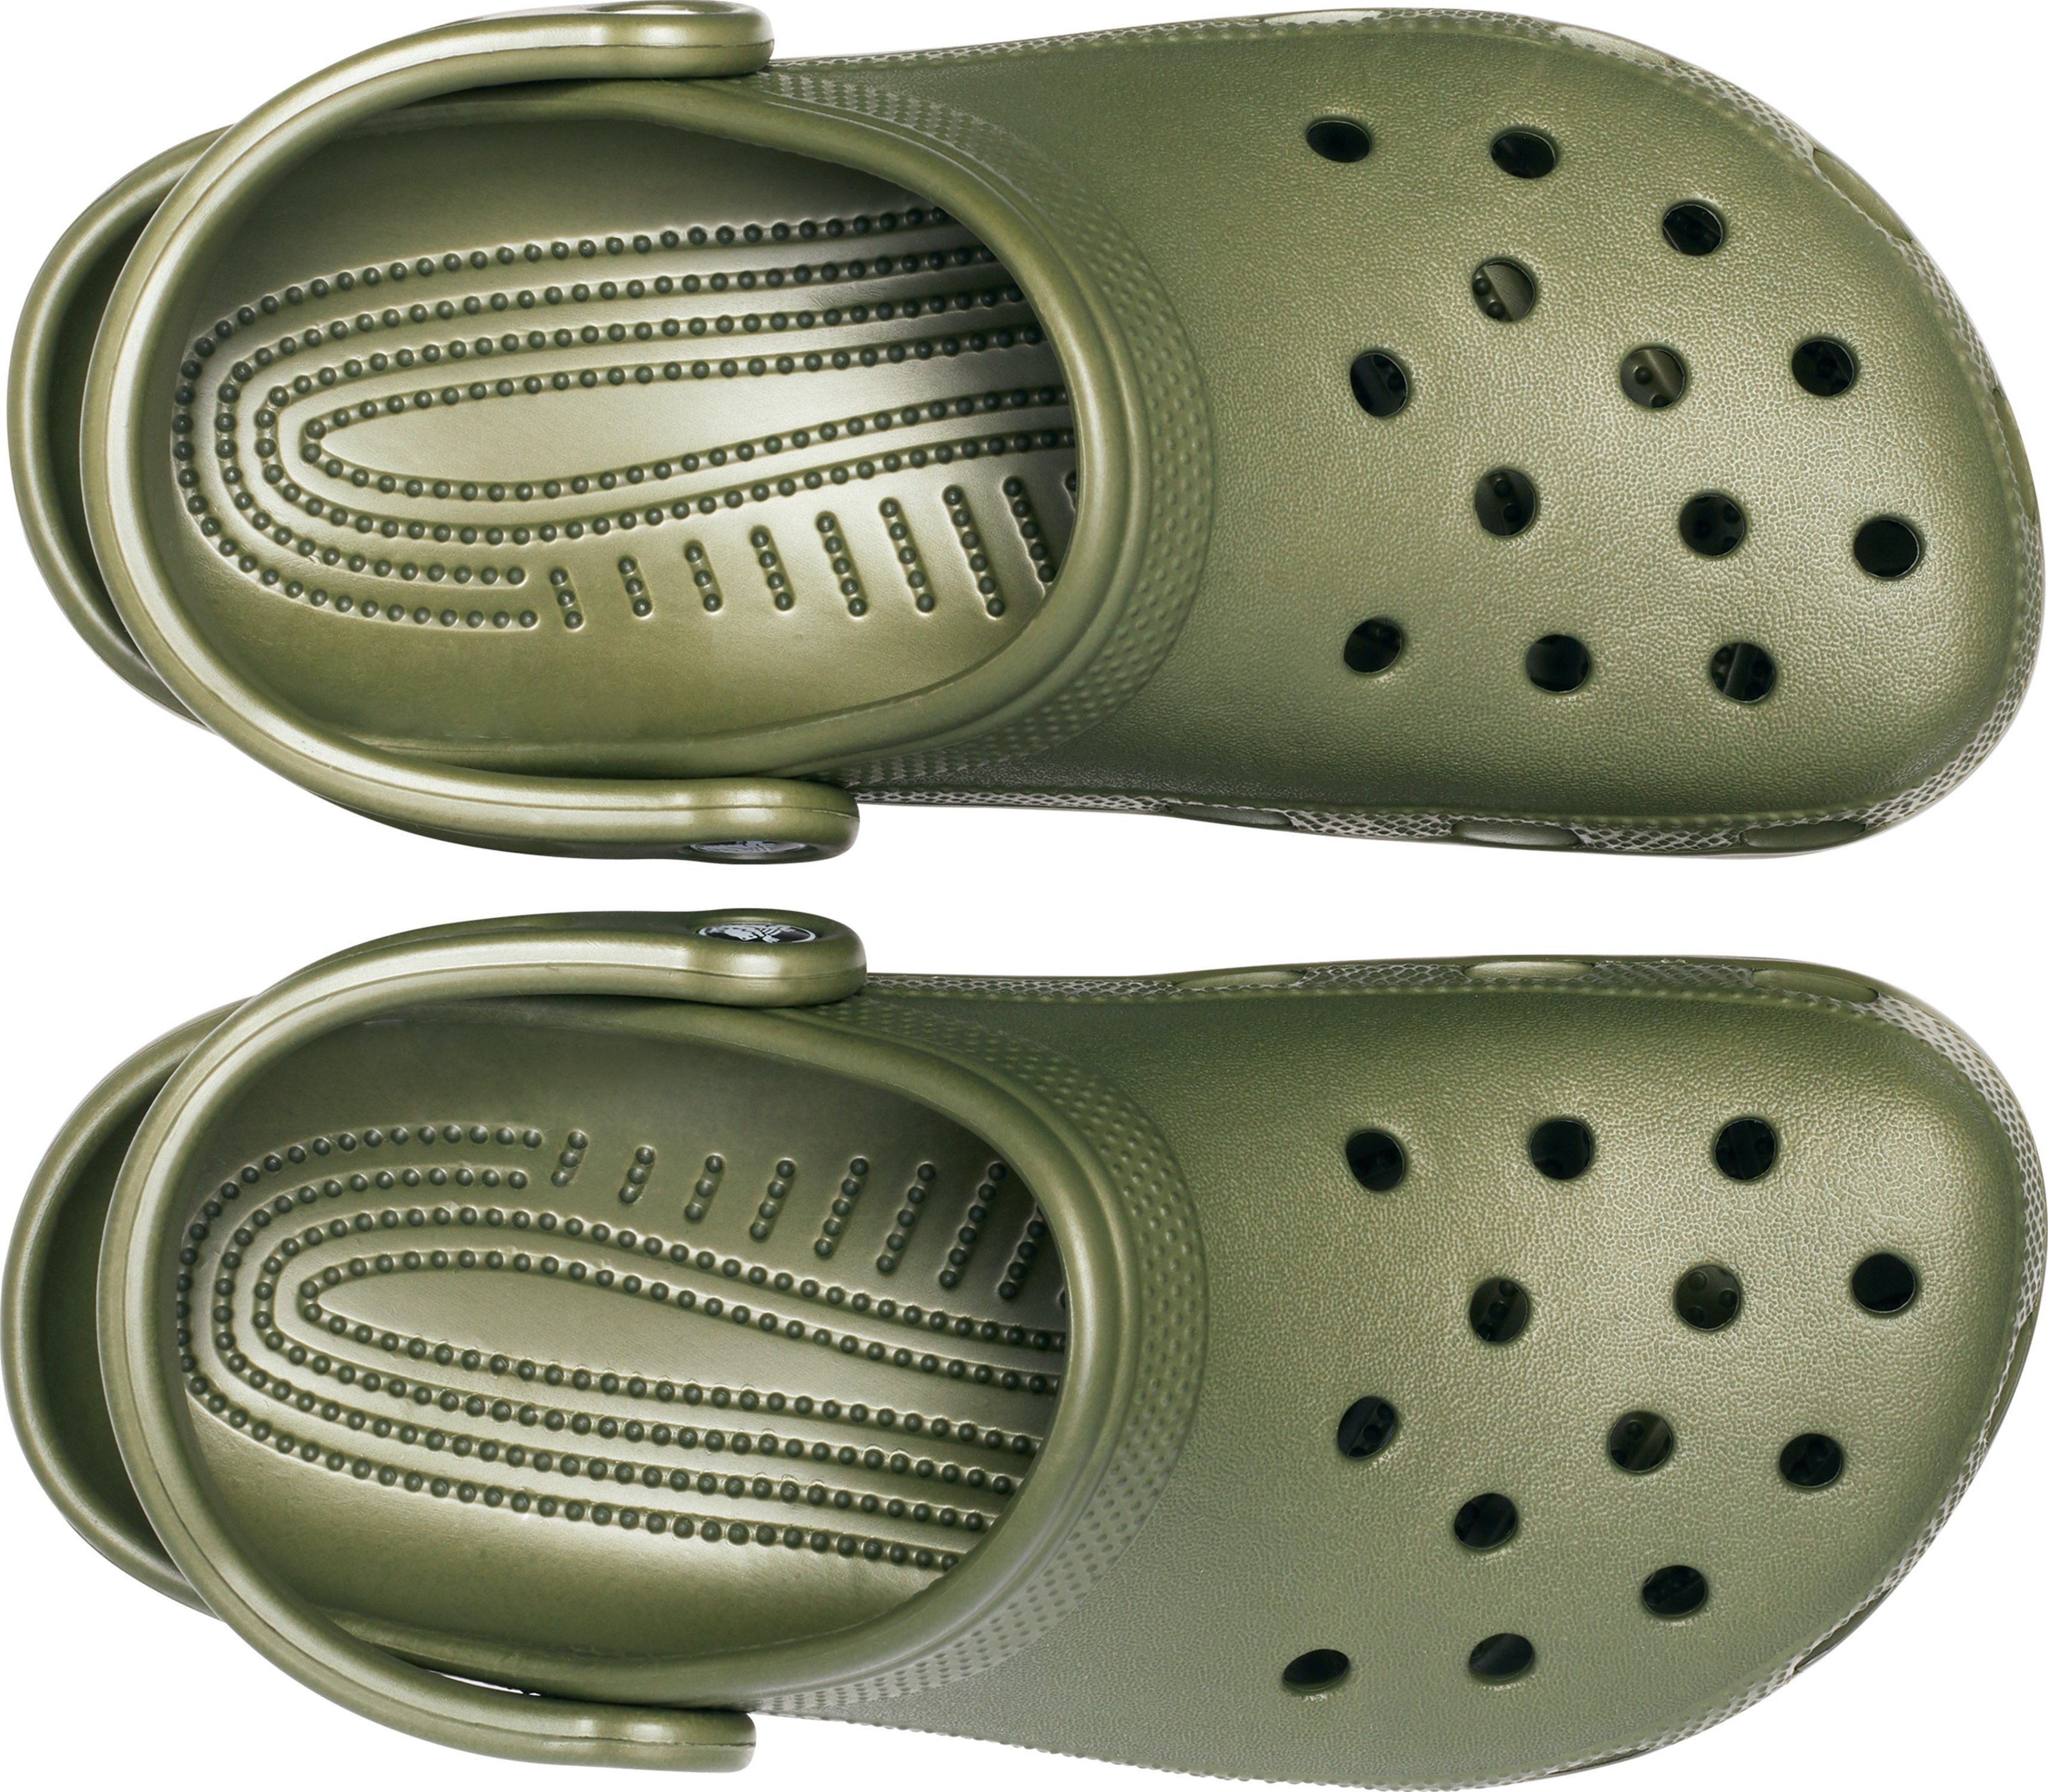 Crocs Classic Clog Logo khaki typischem mit